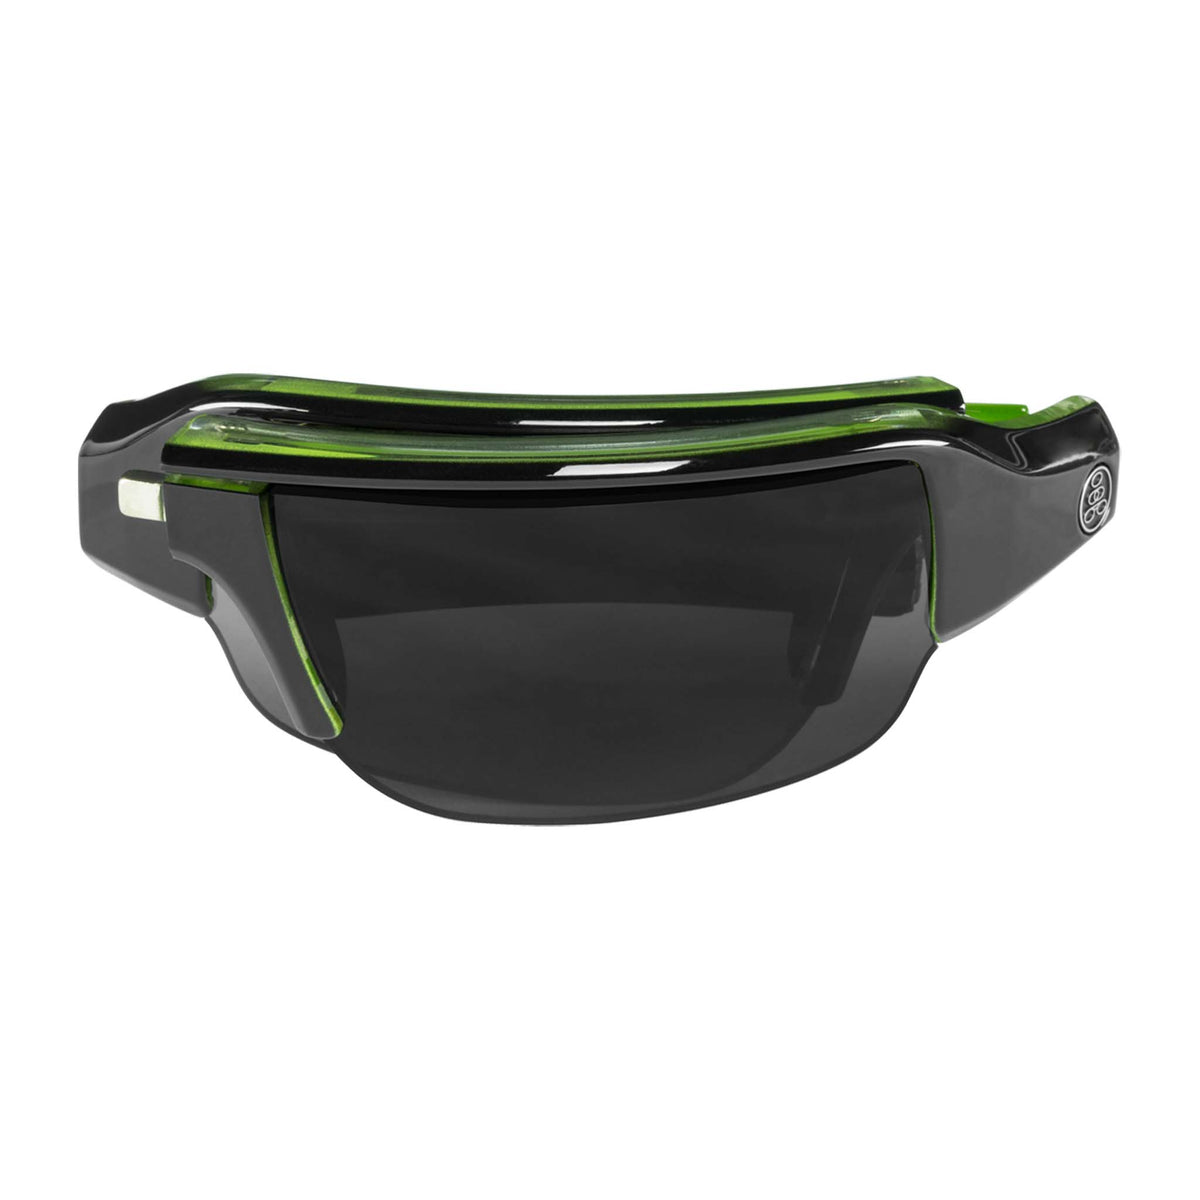 Popticals, Premium Compact Sunglasses, PopGun, 040010-GLGP, Polarized Sunglasses, Gloss Black over Green Crystal Frame, Gray Lenses, Compact View